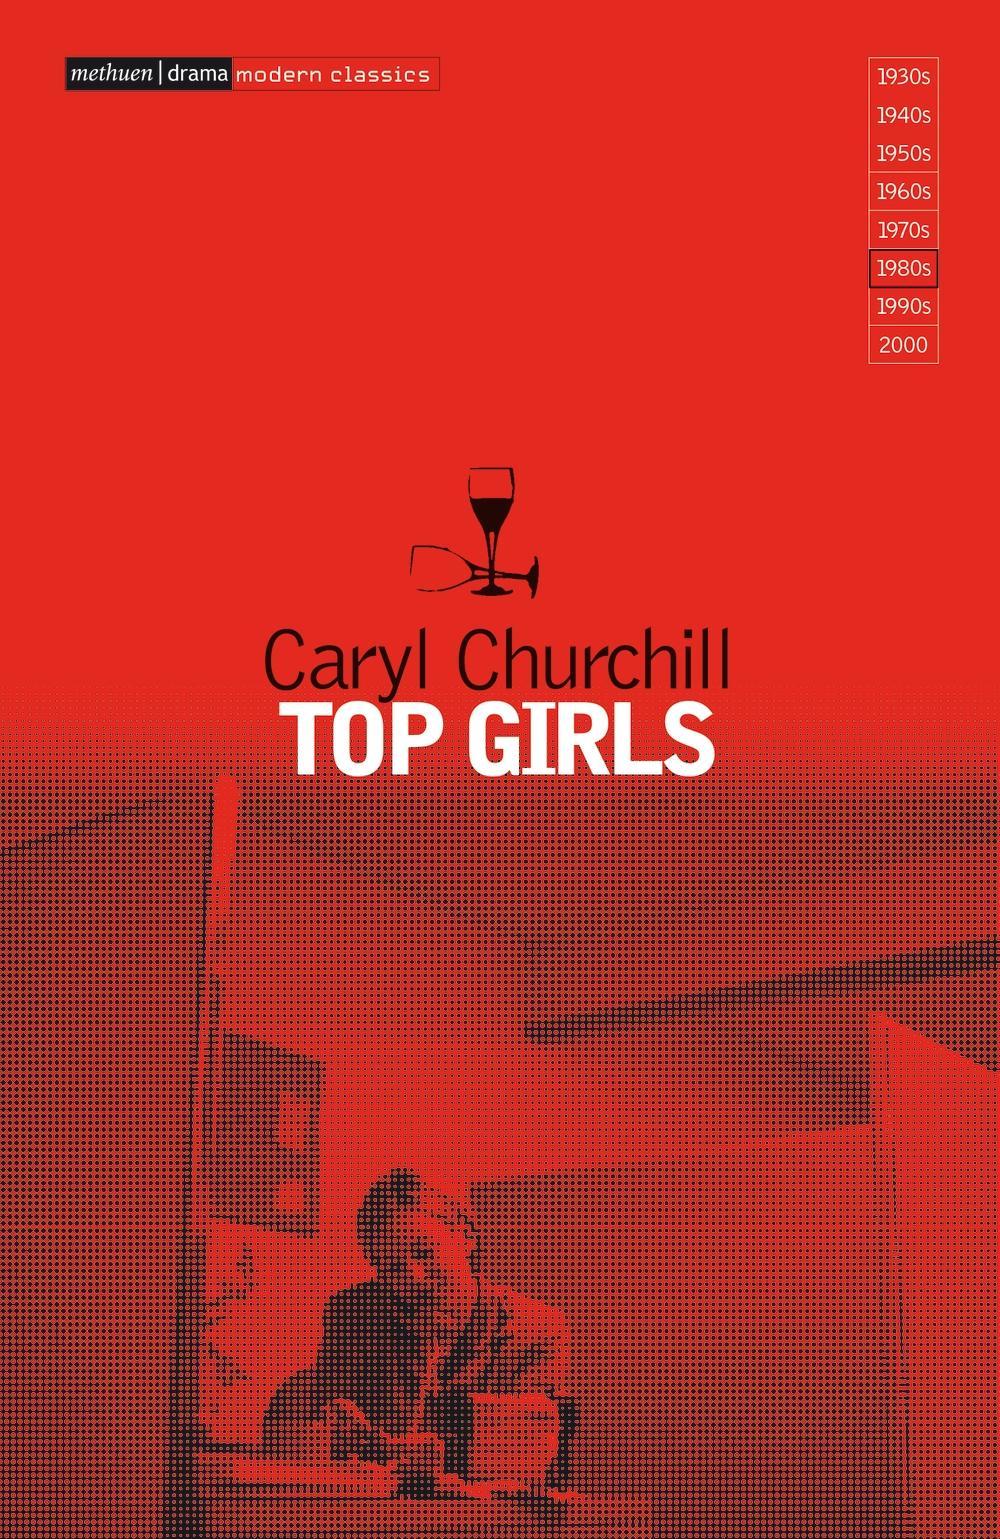 Top Girls - Caryl Churchill